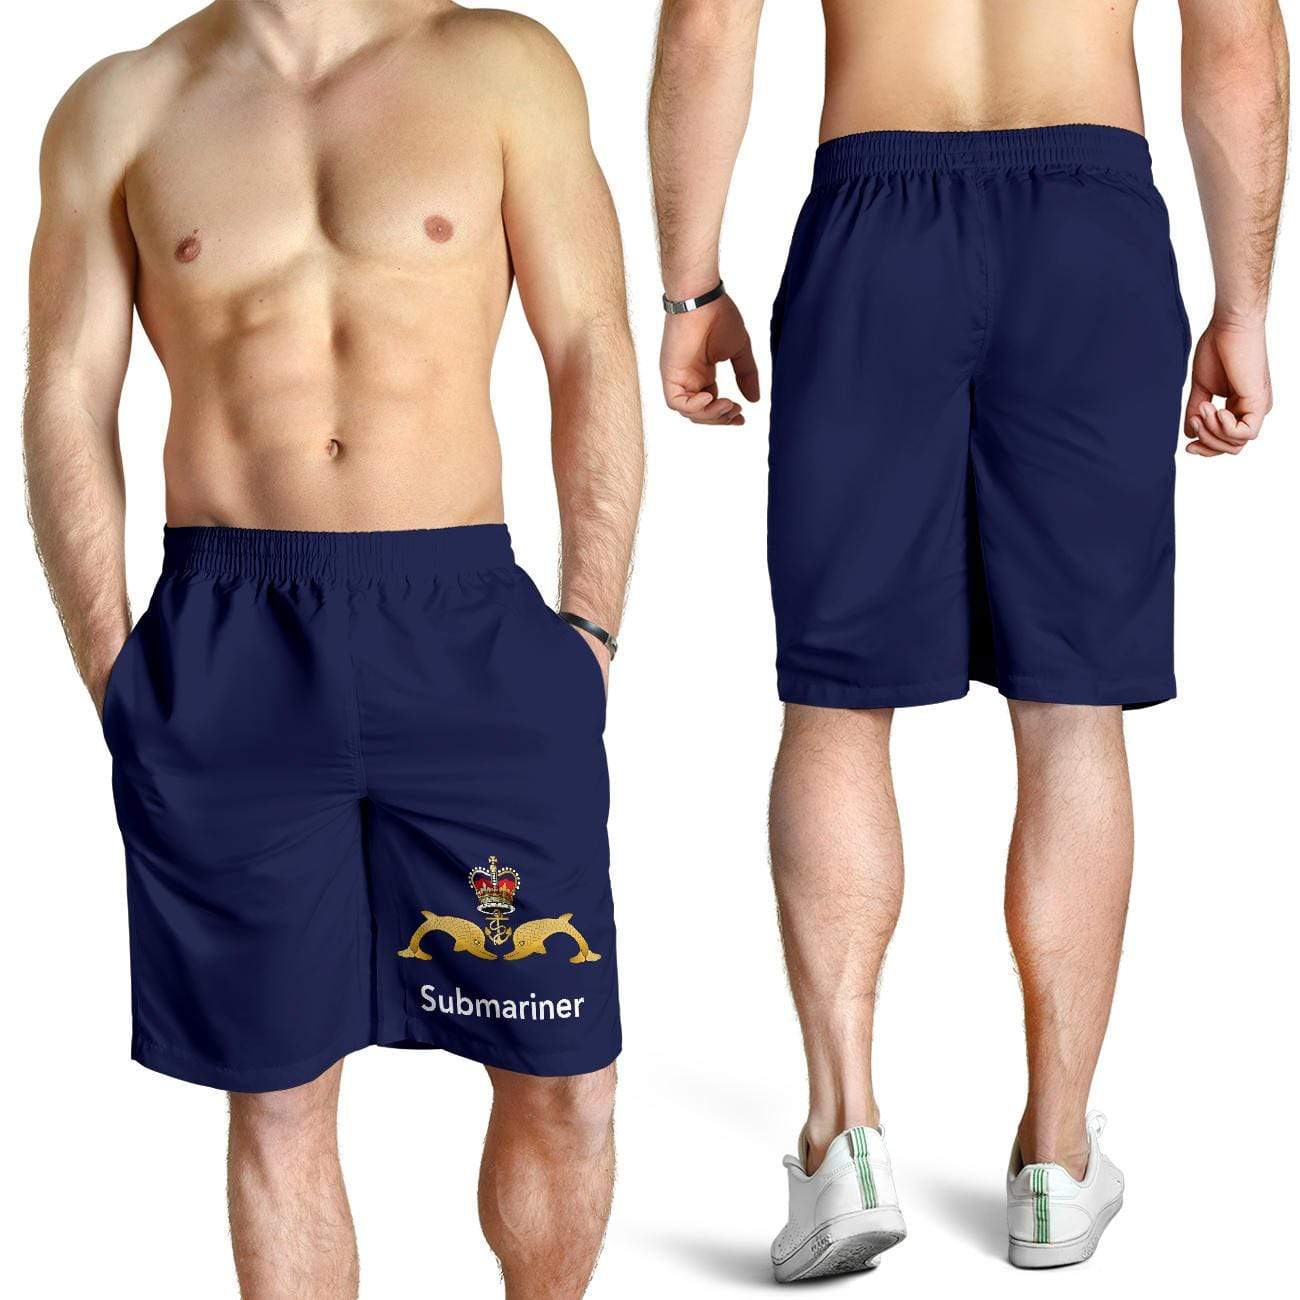 shorts Submariner Men's Shorts